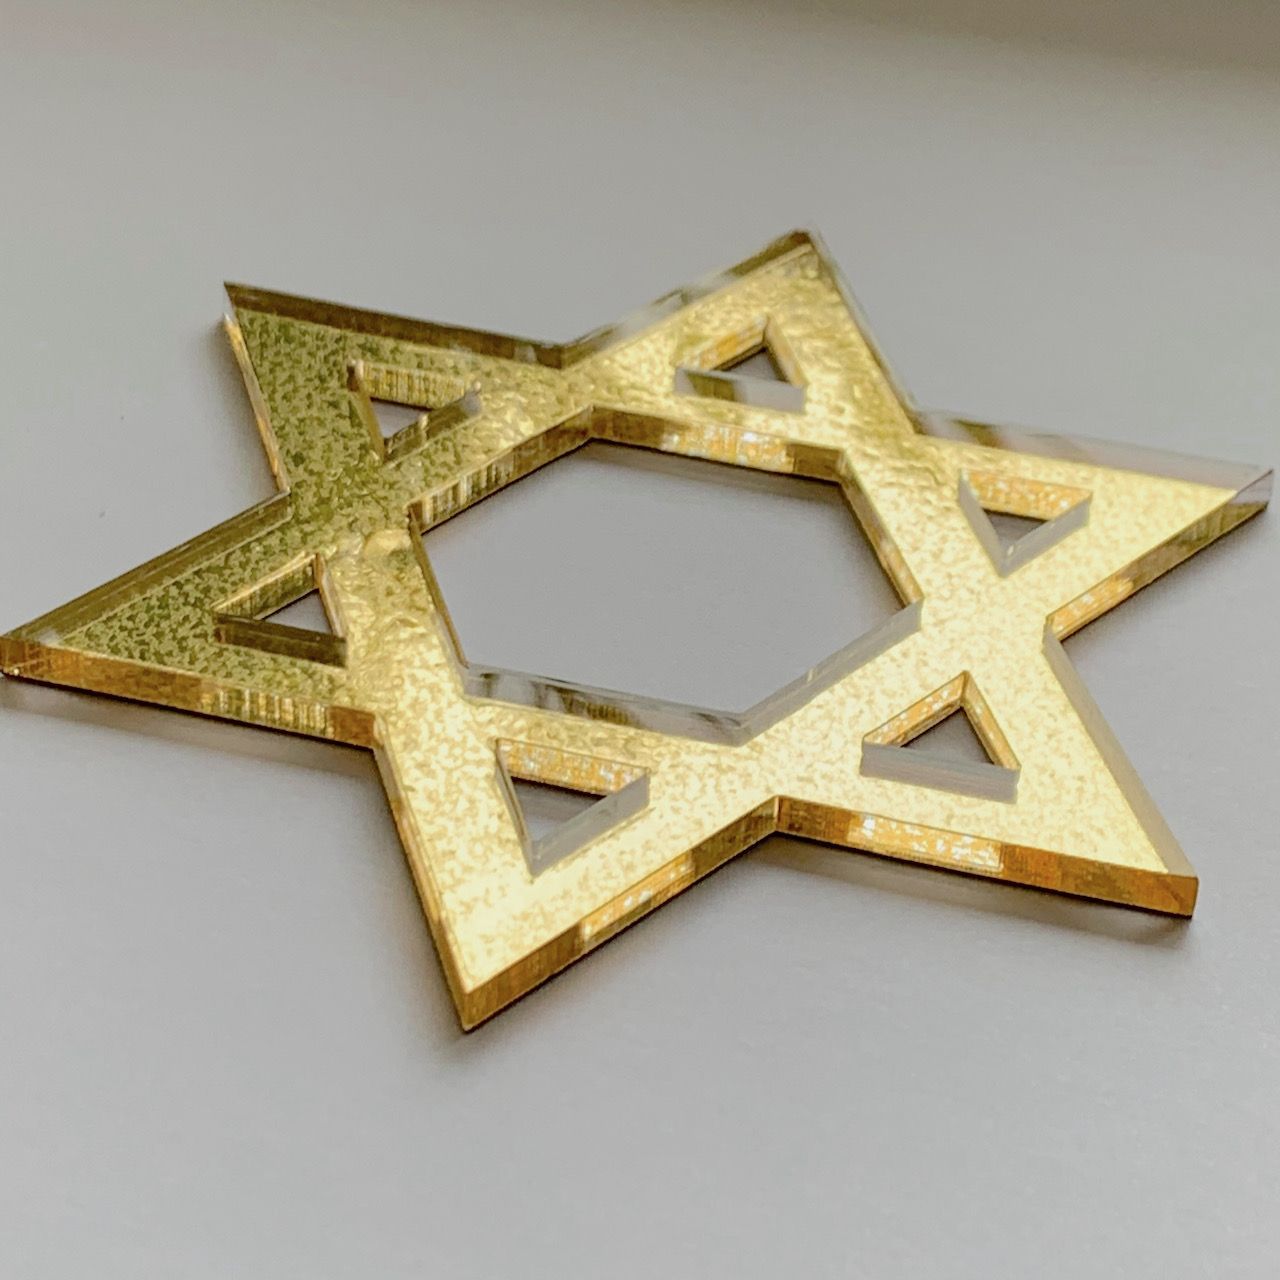 Наклейка "Звезда Давида" пластик 3*3 см, толщина 3 мм, цвет золото